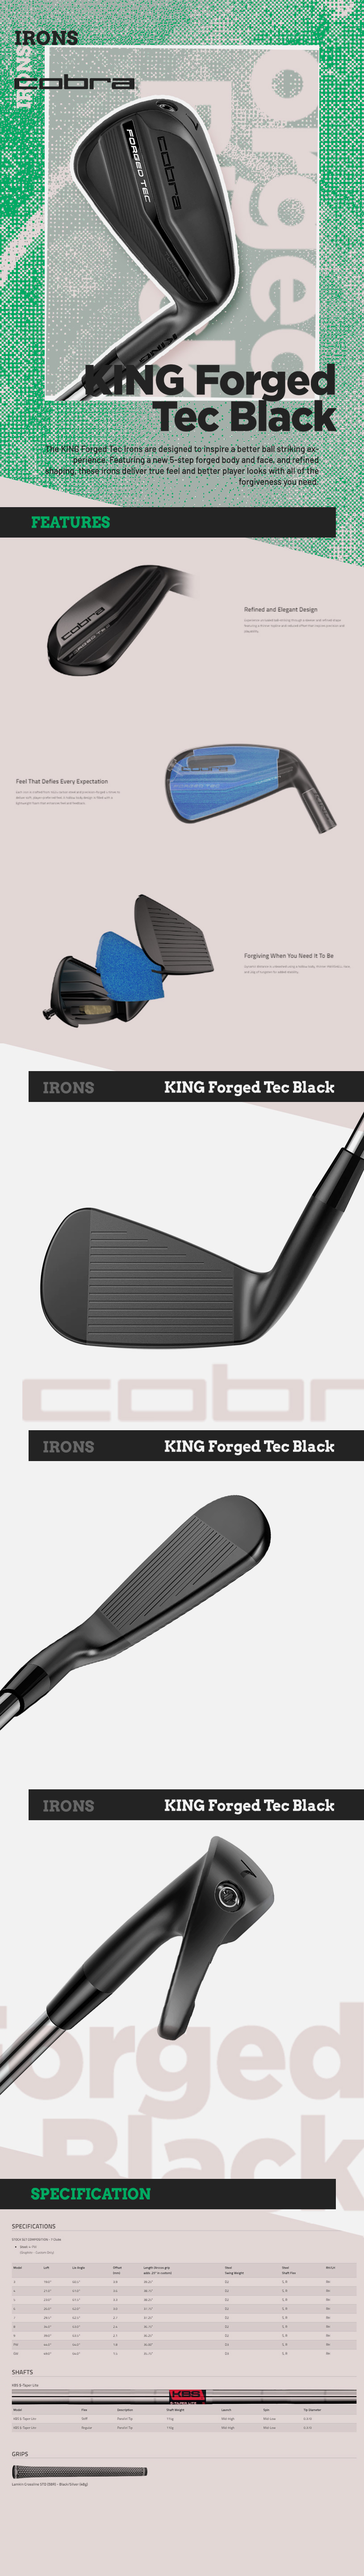 King-Forged-Tec-Black-Irons_desc.jpg